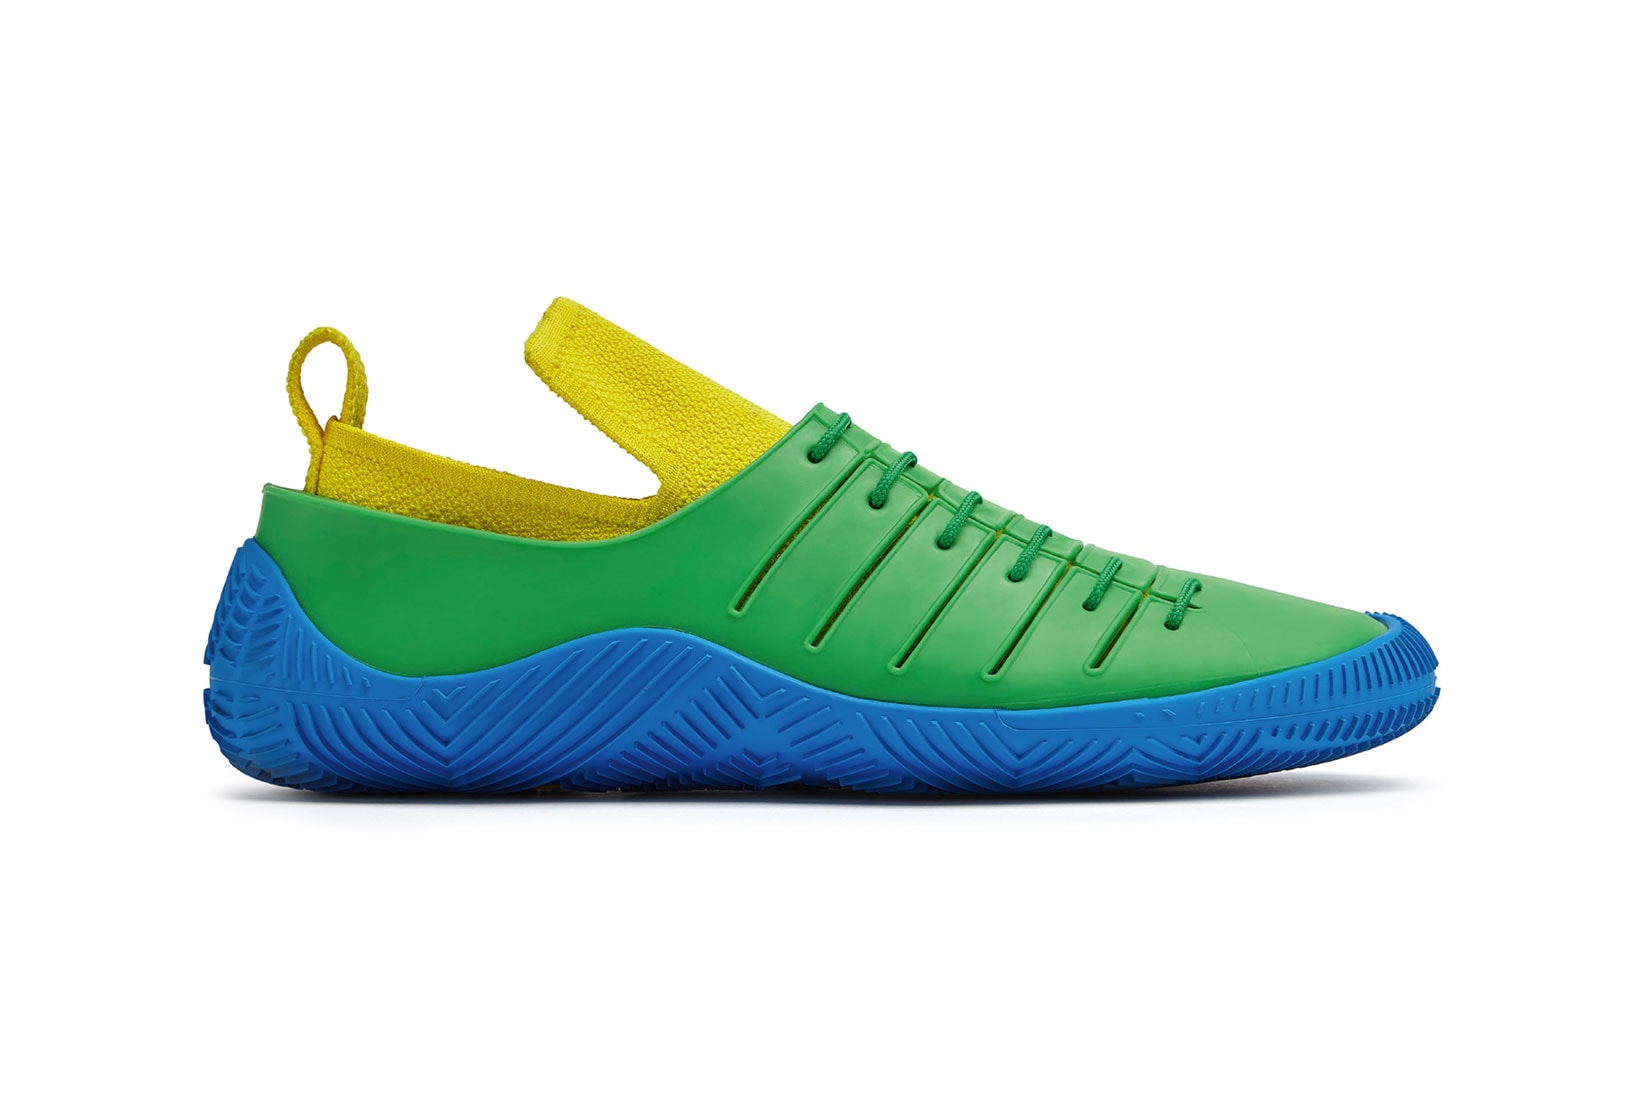 bottega veneta salon 01 footwear collection daniel lee barefoot second skin blue green yellow